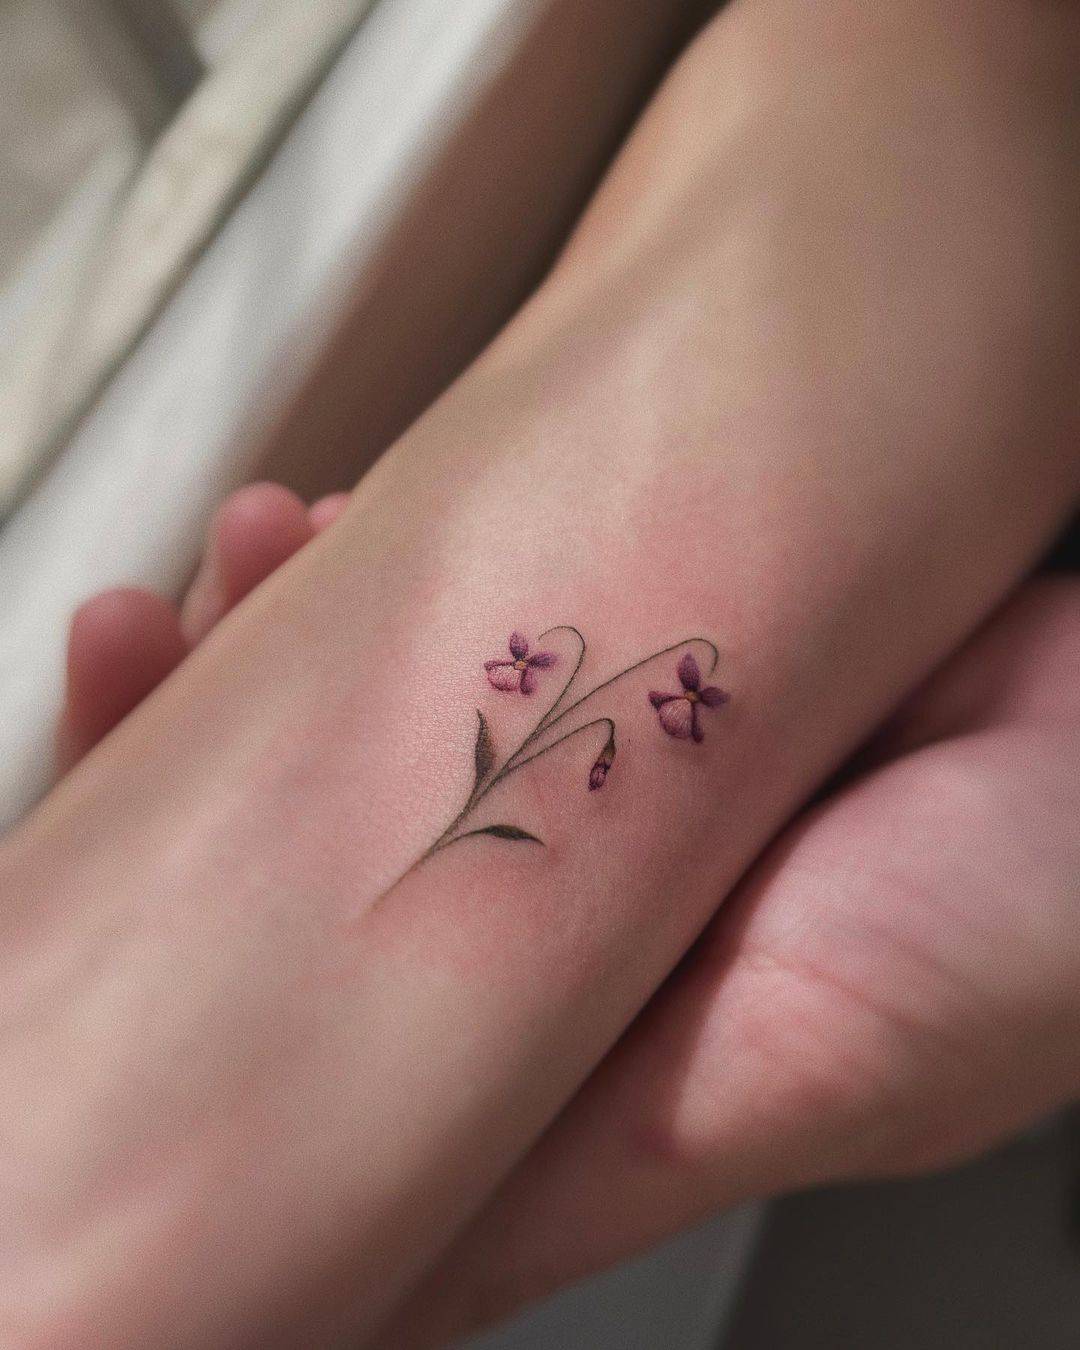 Cute violet tattoo on wrist by jehlickou